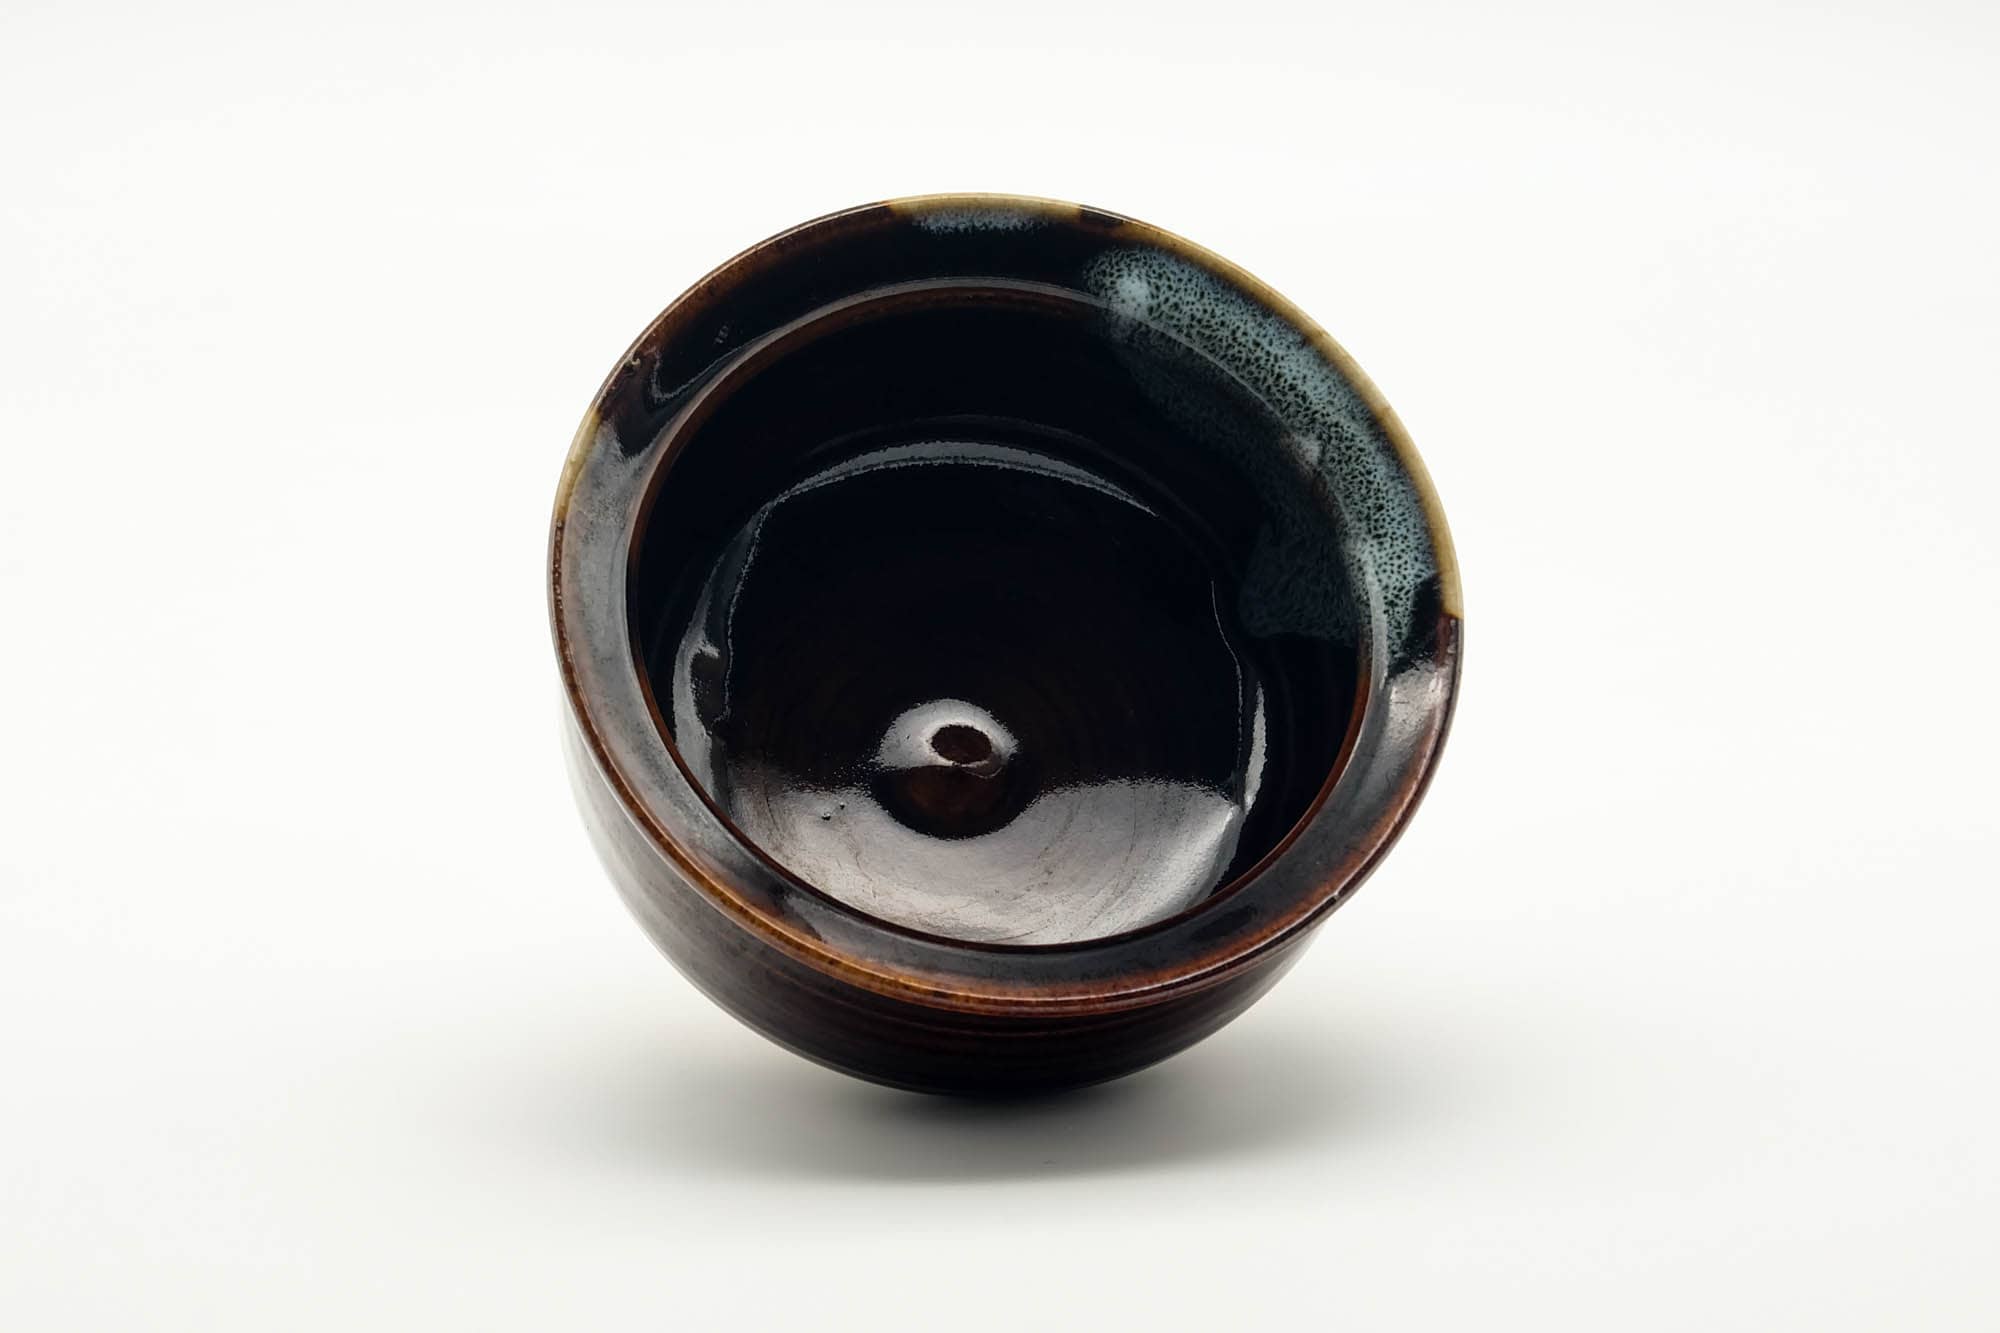 Japanese Kensui - Black Brown Hare's Fur Glazed Water Bowl - 450ml